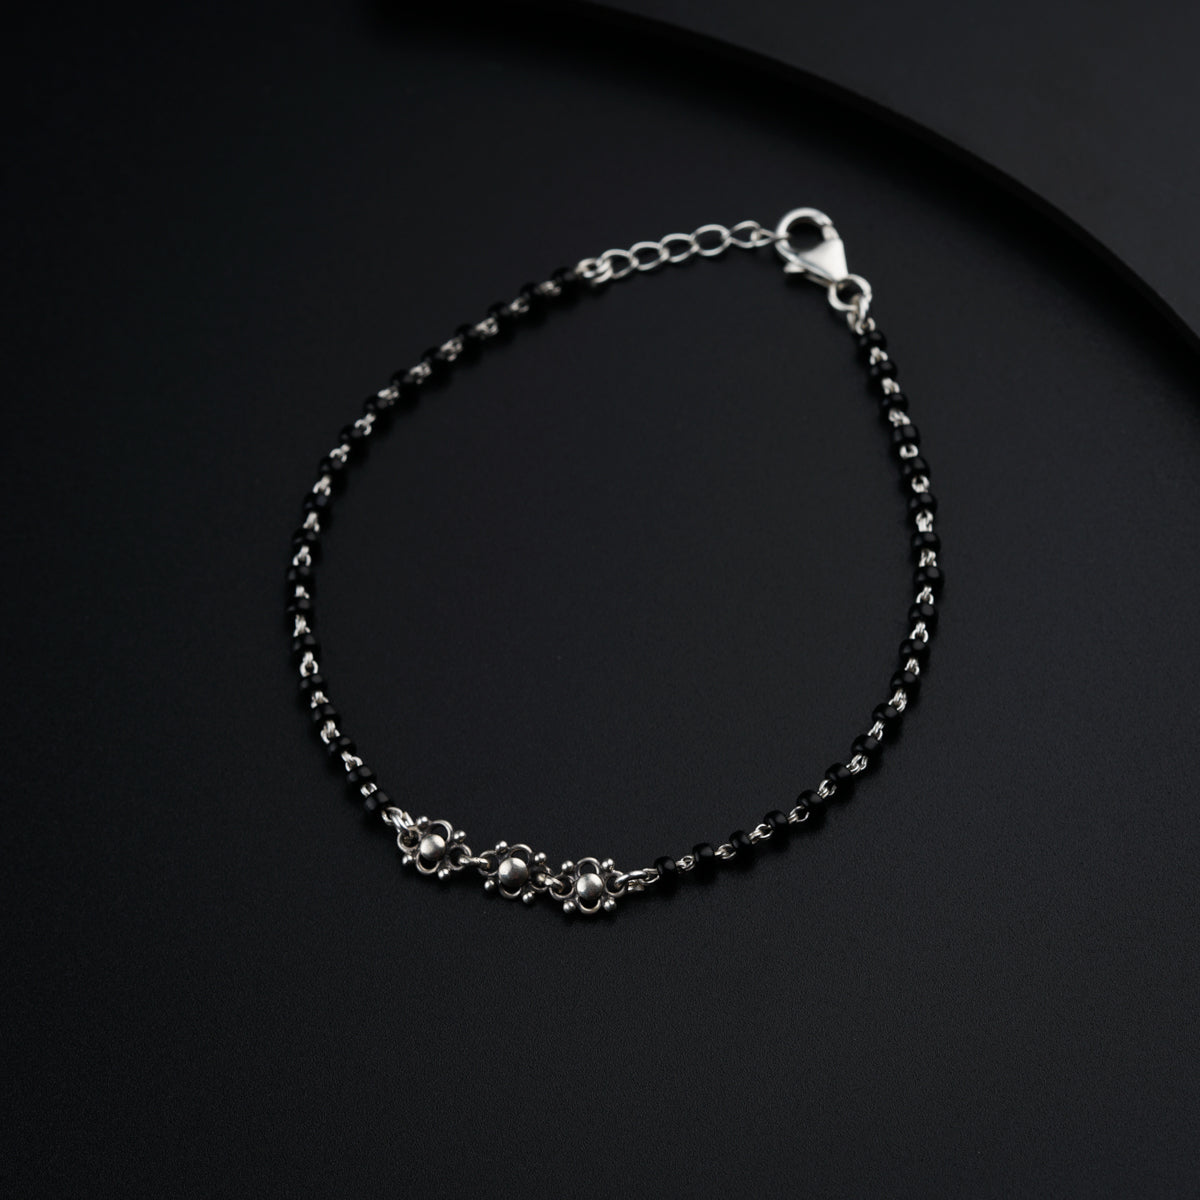 a black and silver bracelet on a black surface